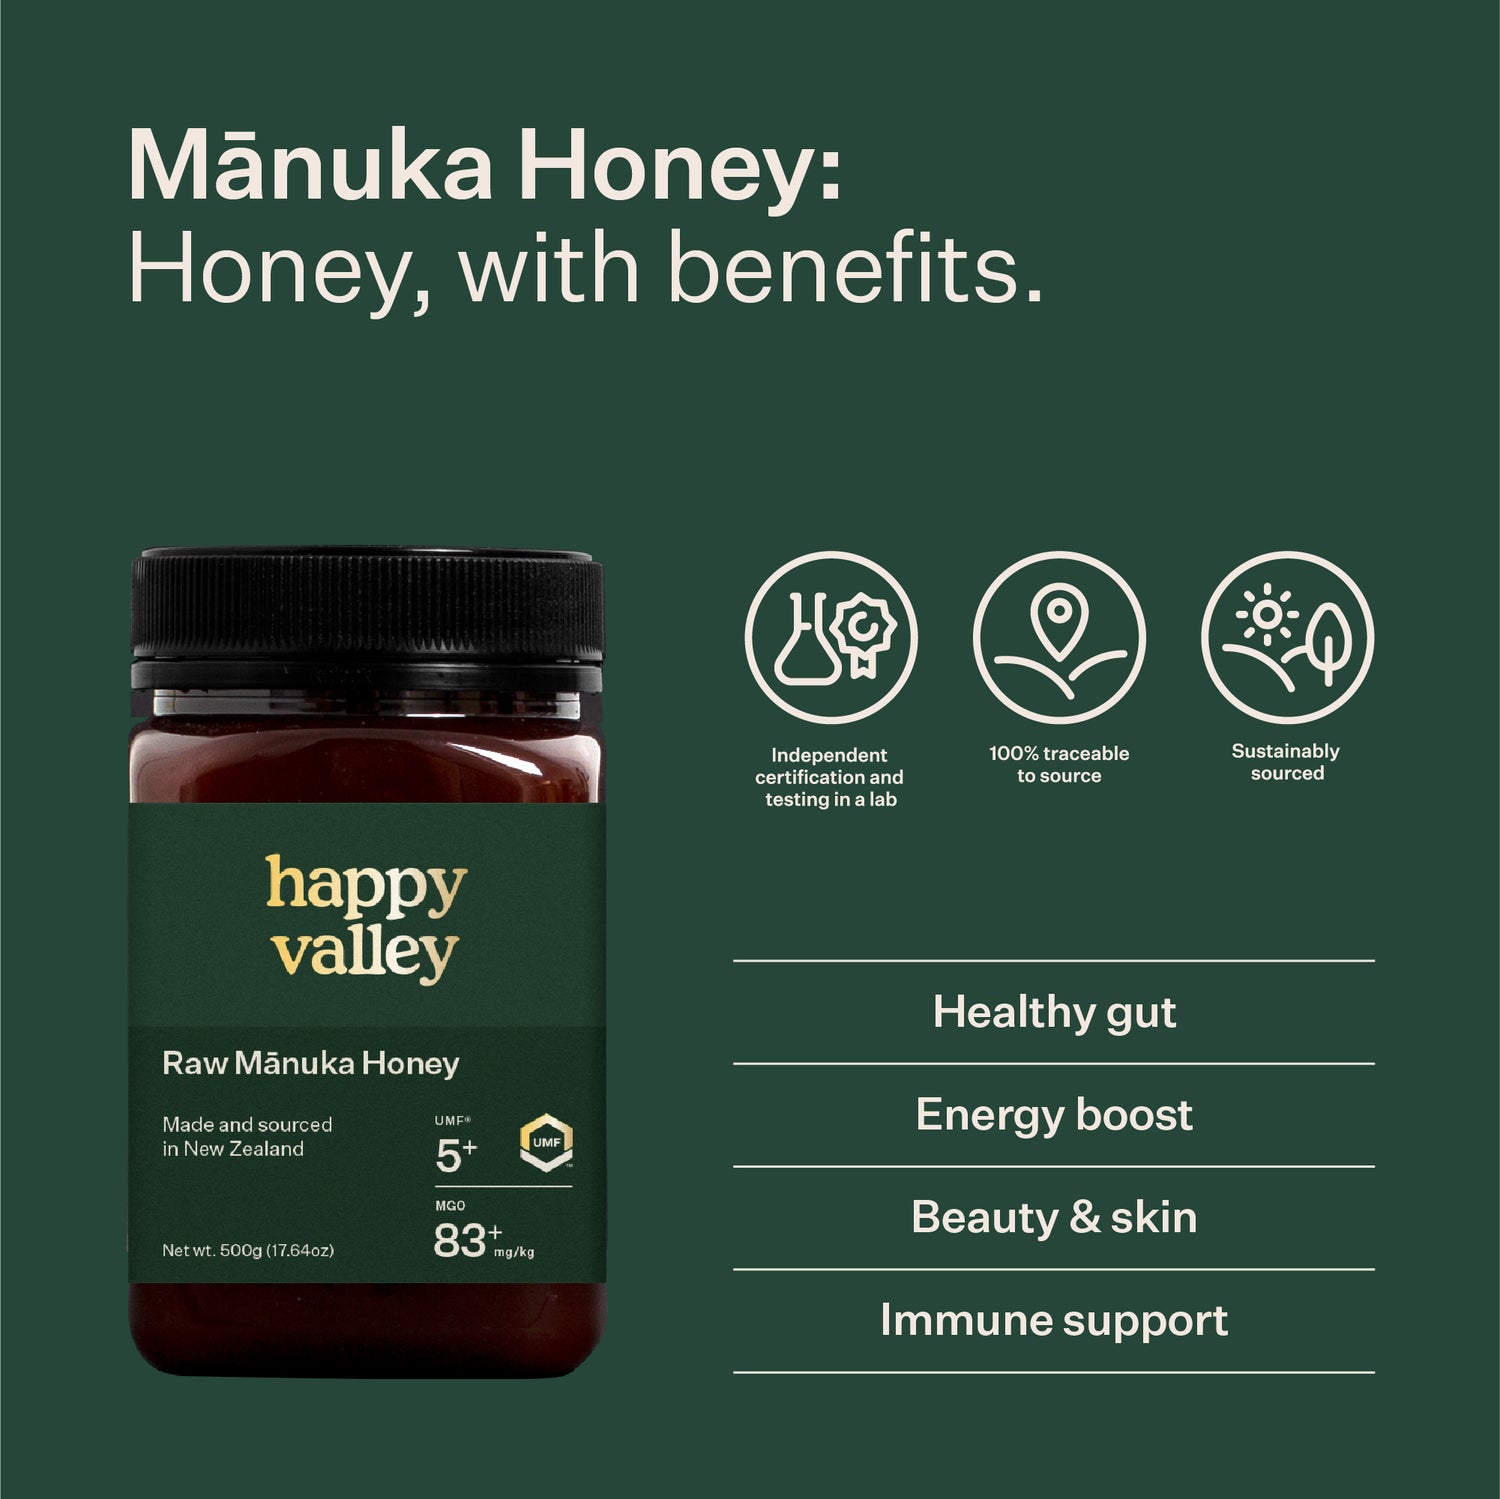 UMF 5+ Mānuka Honey